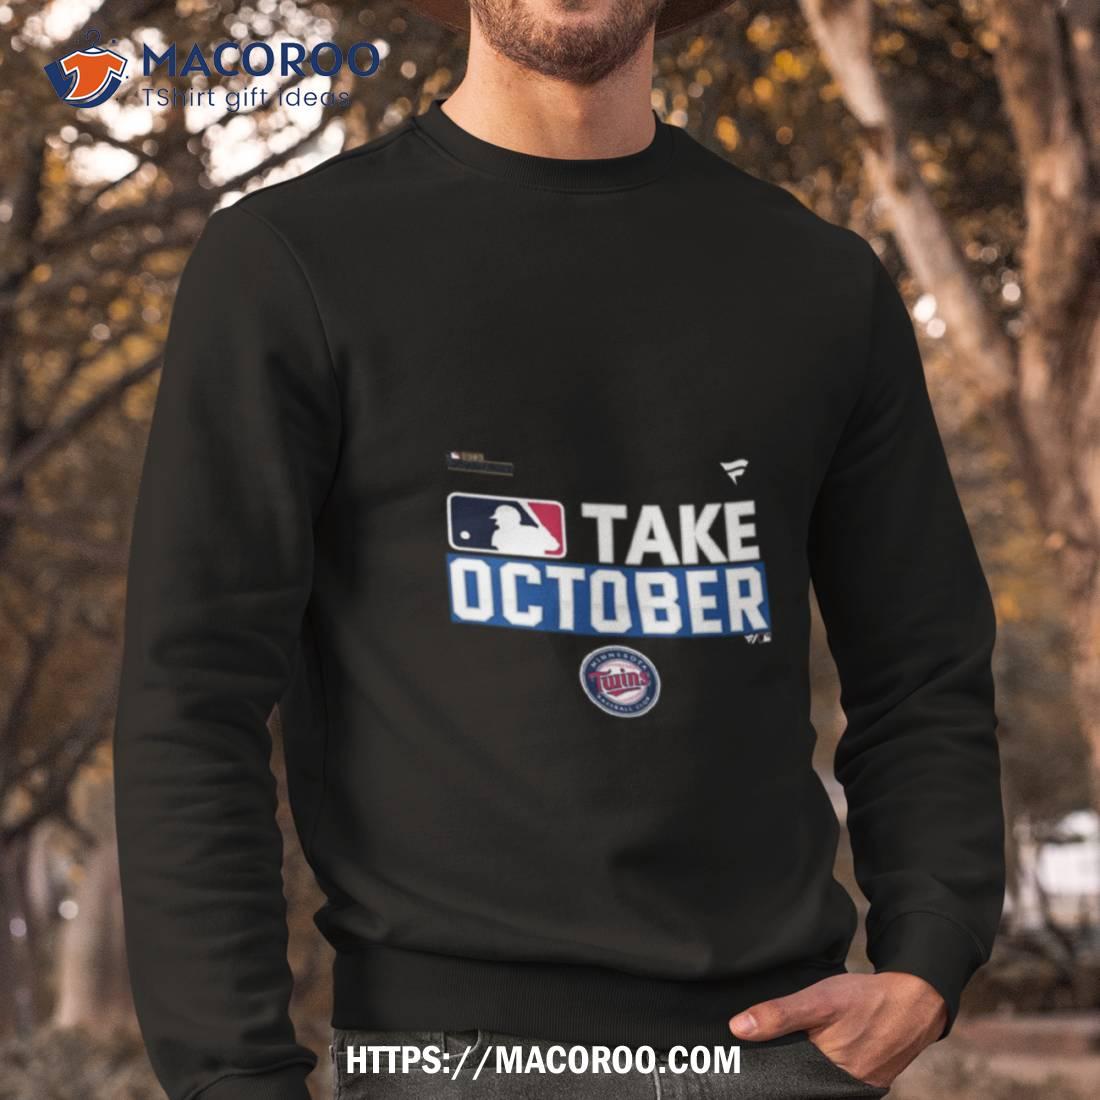 MLB Team Apparel Youth 2023 Postseason Take October Minnesota Twins  Locker Room T-Shirt